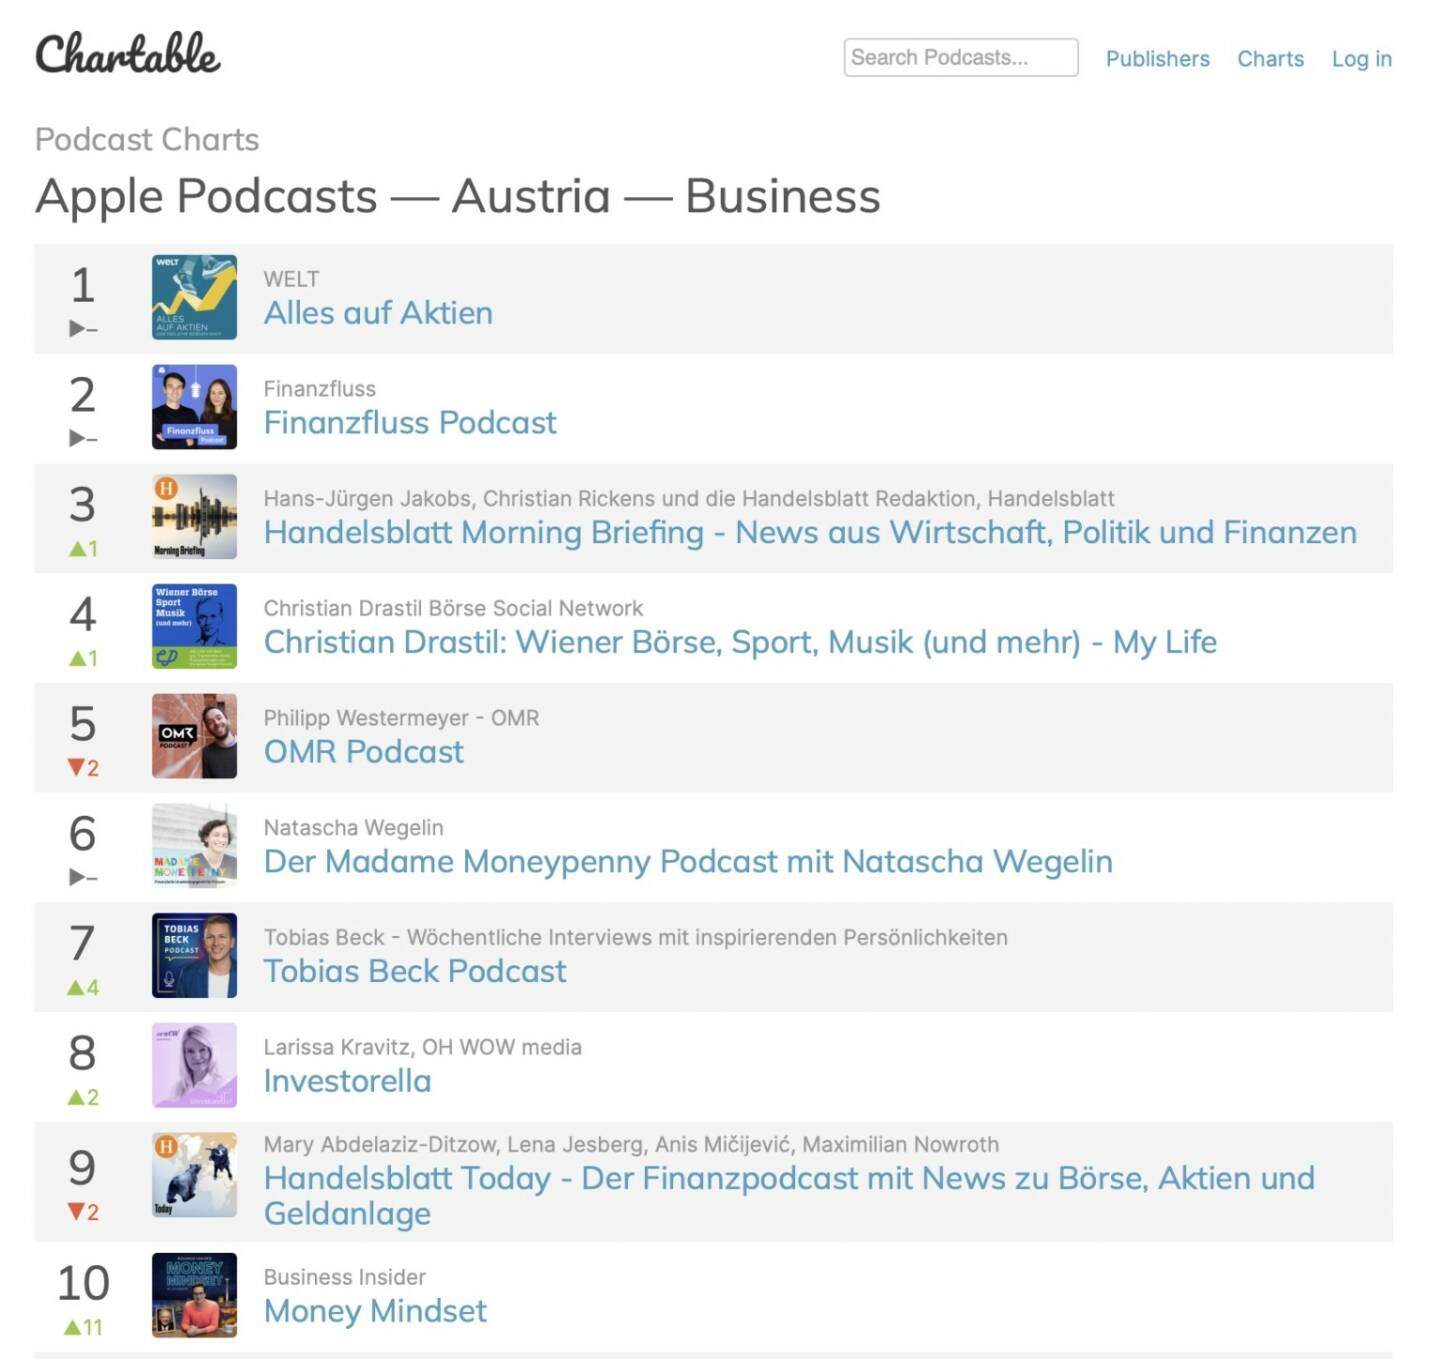 http://www.christian-drastil.com/podcast auf Rang 4 in den Apple Podcast Charts Austria Business unter fast lauter deutschen Podcasts